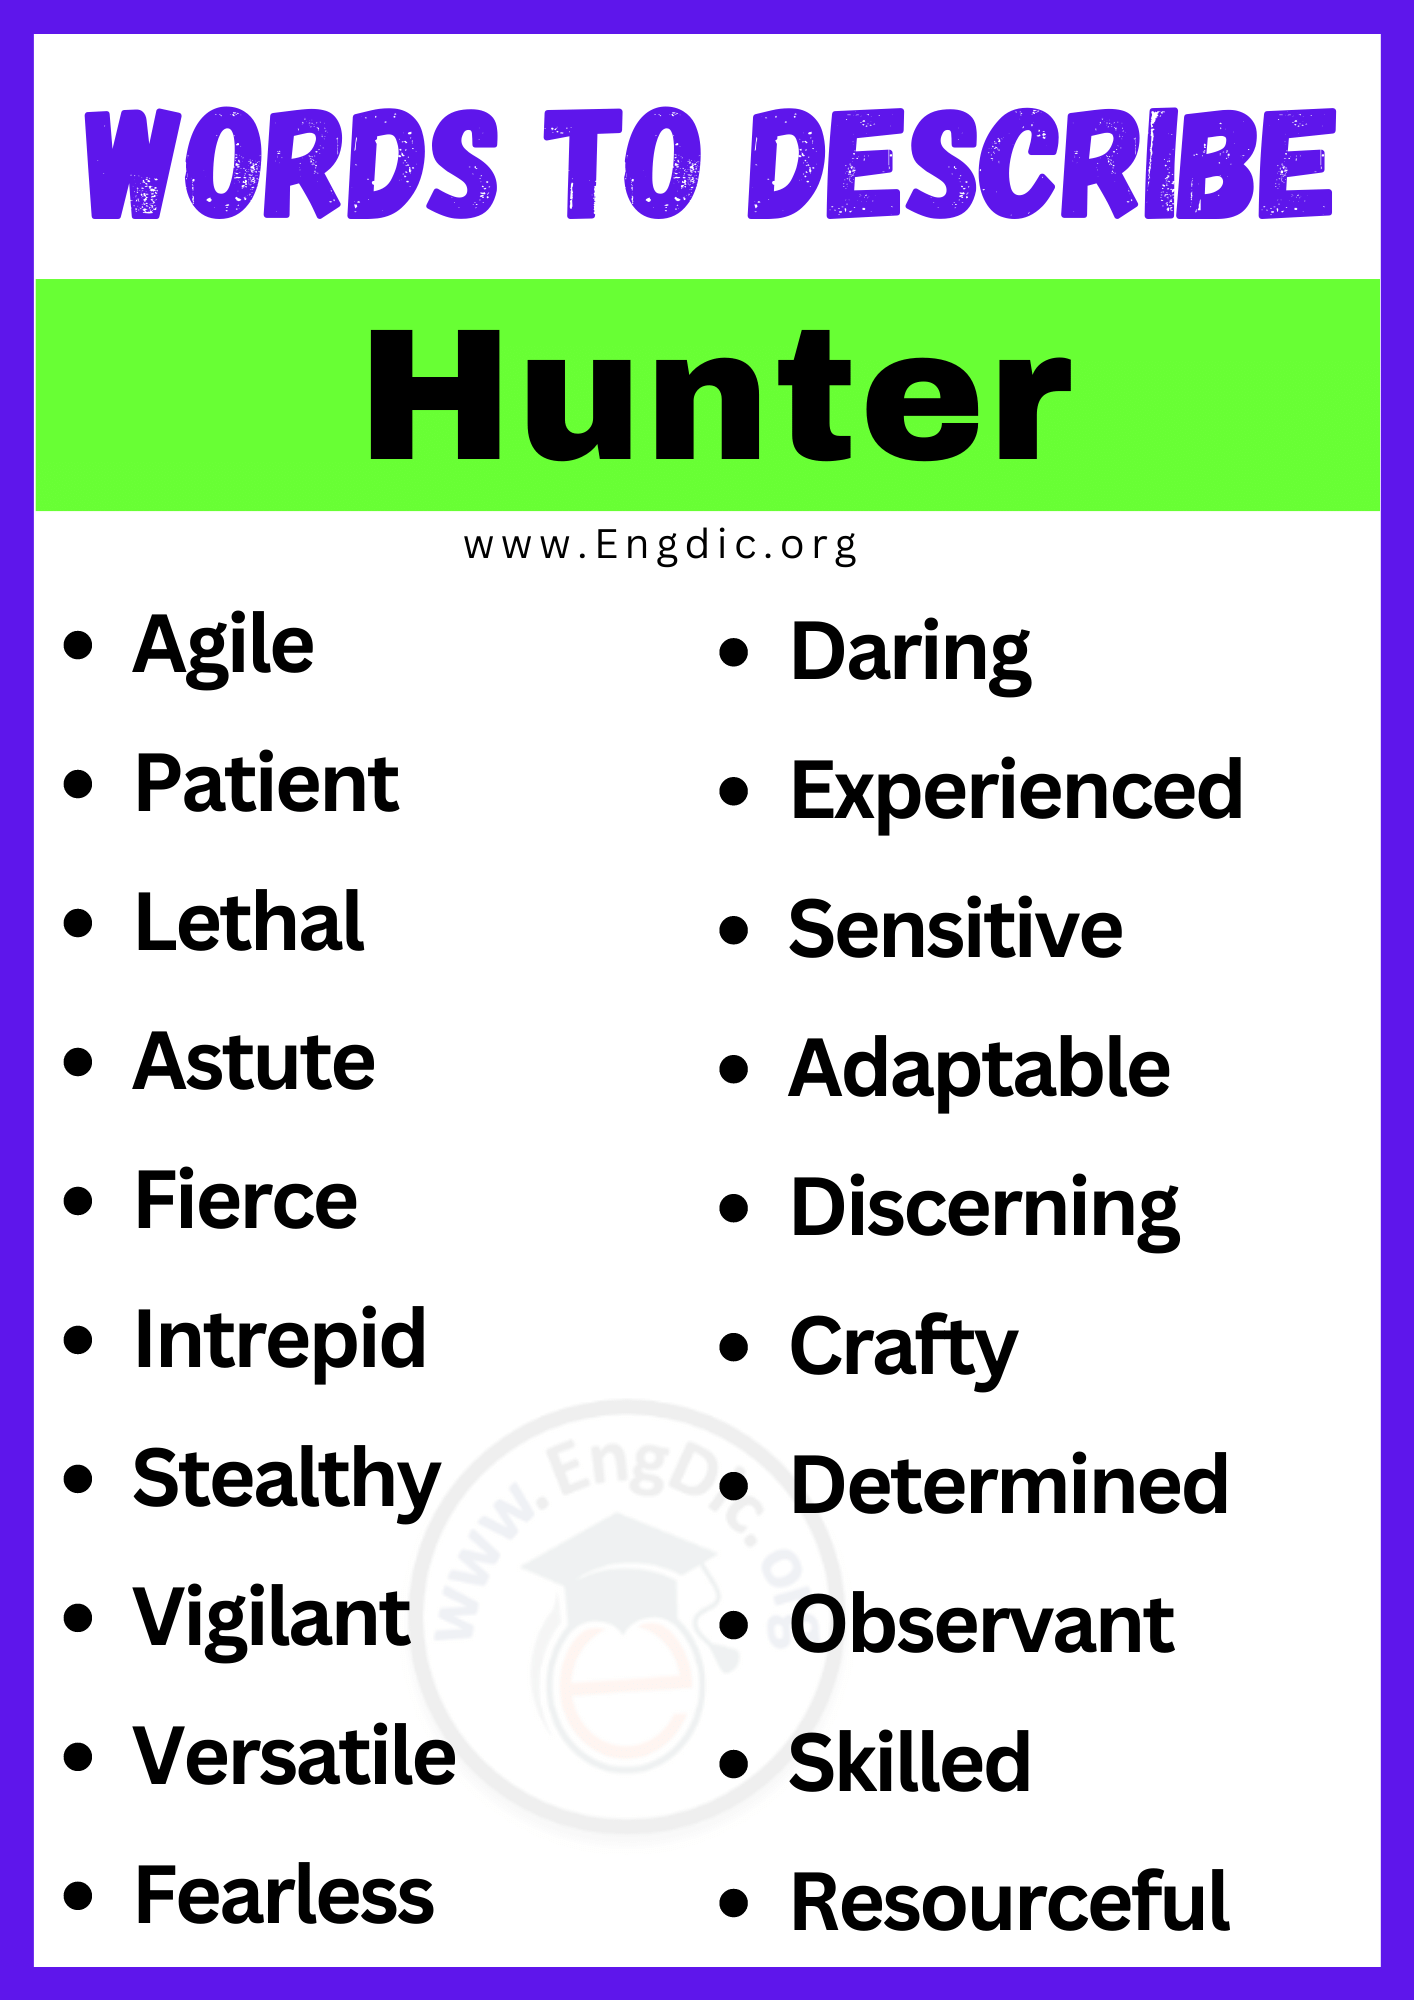 Words to Describe Hunter